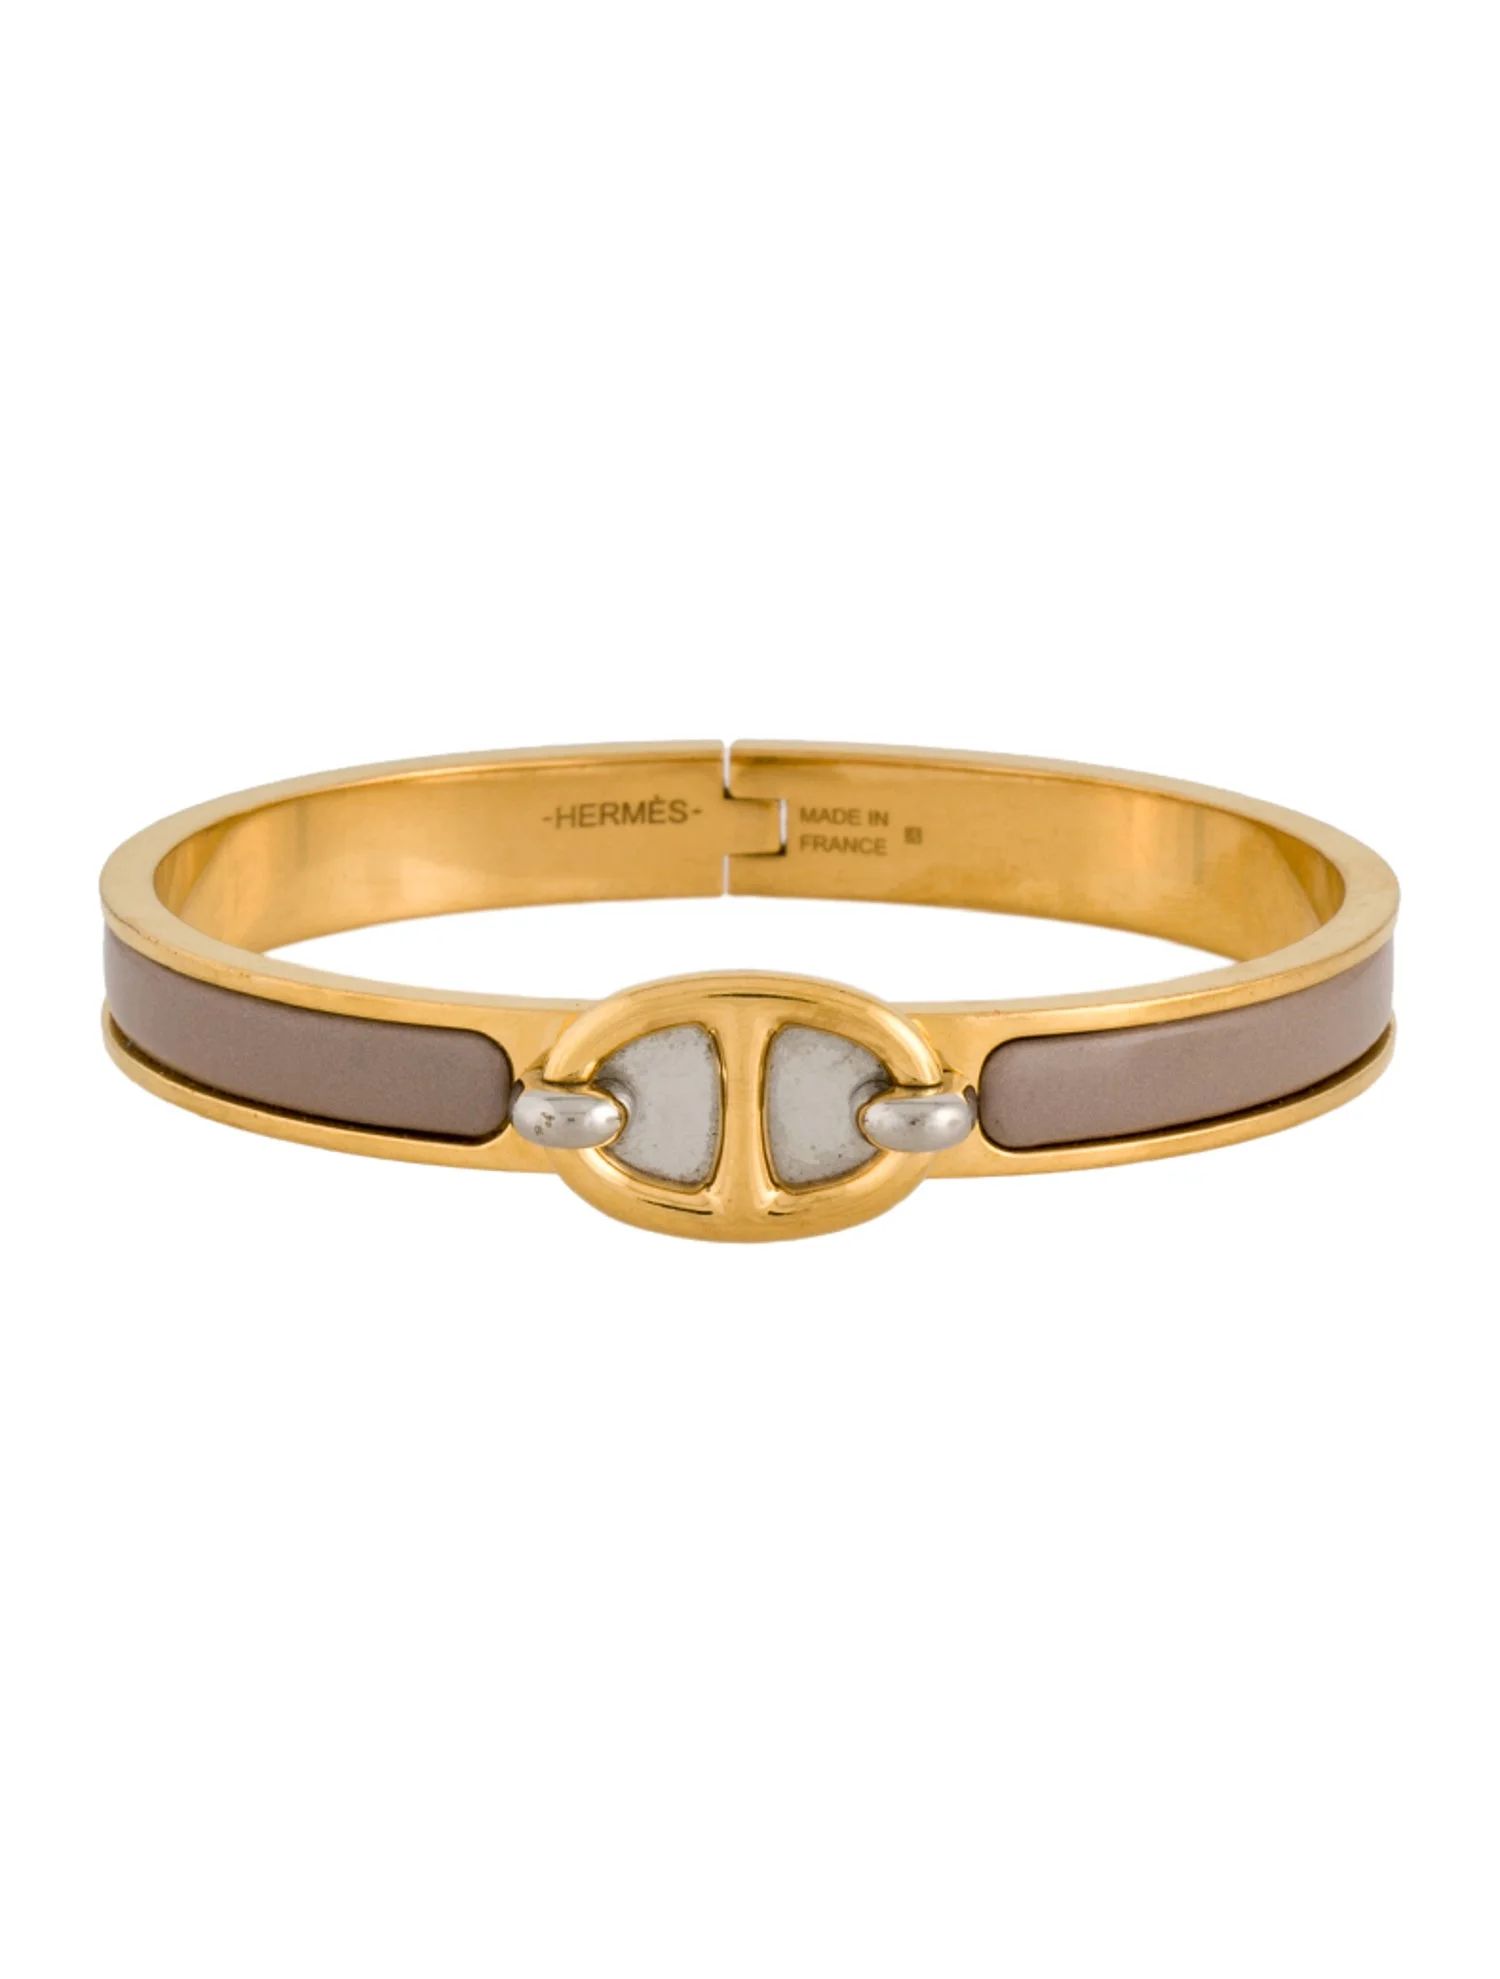 Mini Clic Chaine d'Ancre bracelet | The RealReal